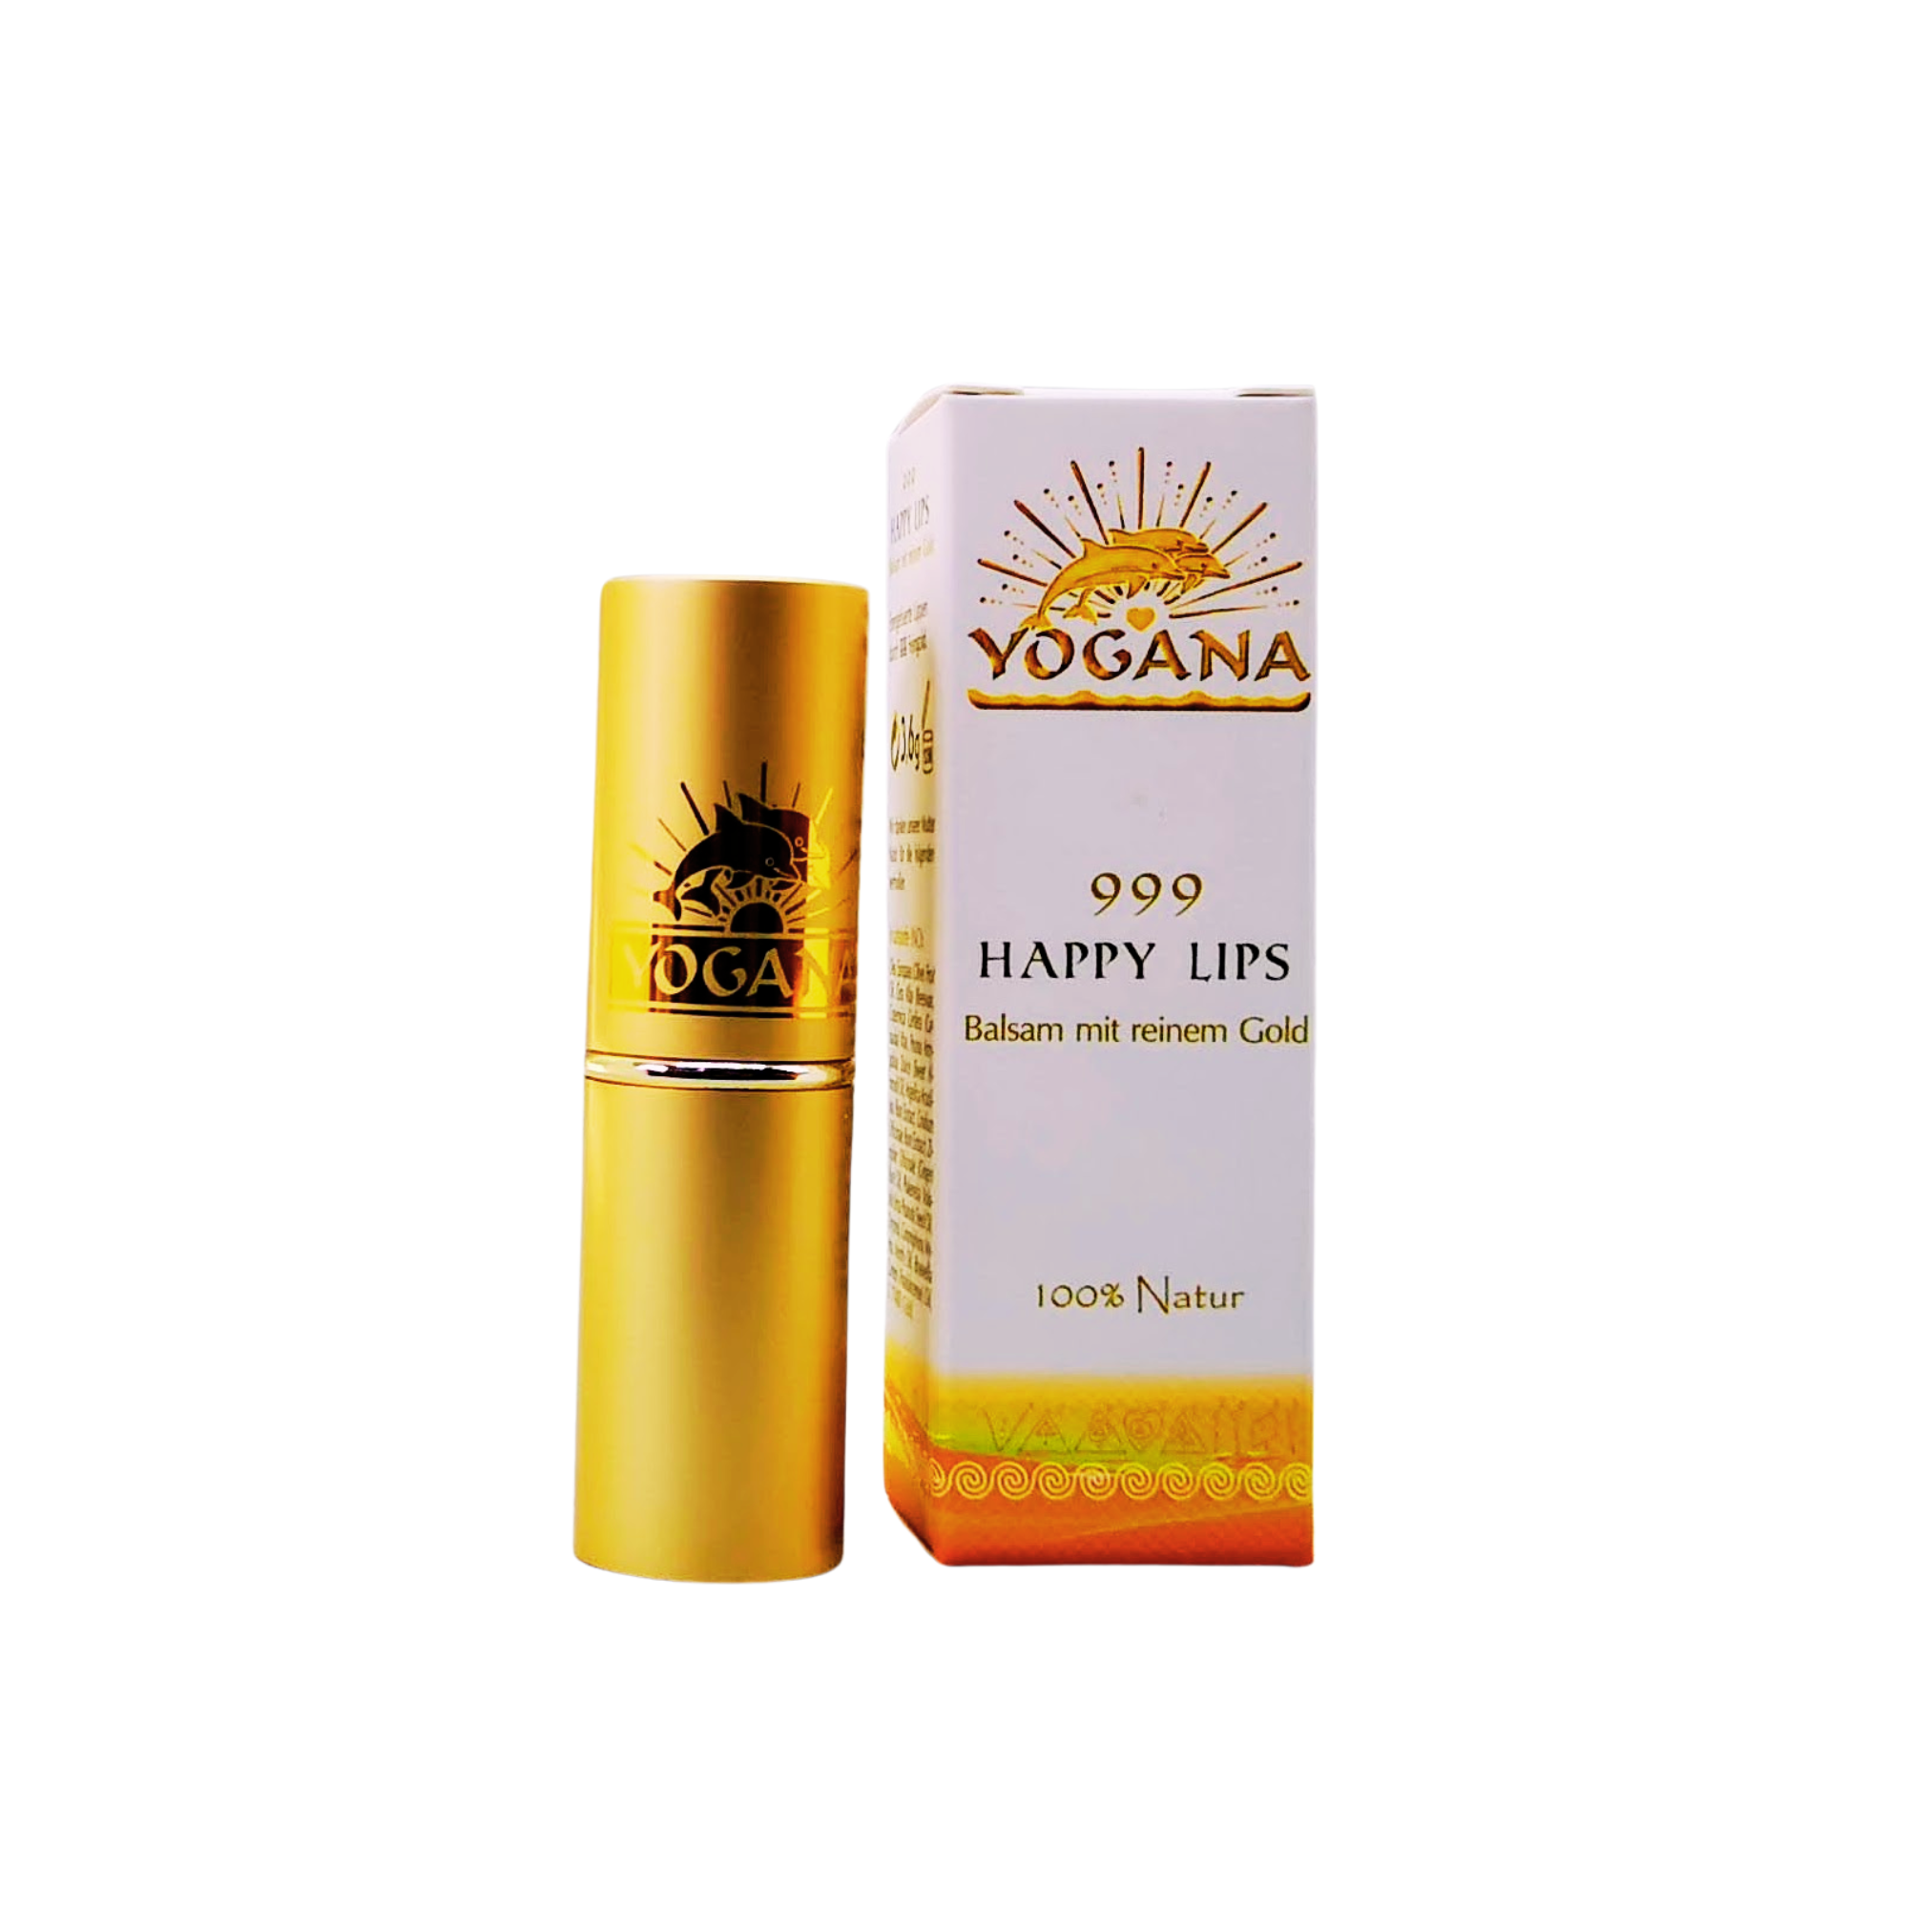 Yogana 999 Happy Lips Lippenbalsam Frau Gesicht Lippenstift Gold Kosmetik Kornkammer Natur mit Verpackung